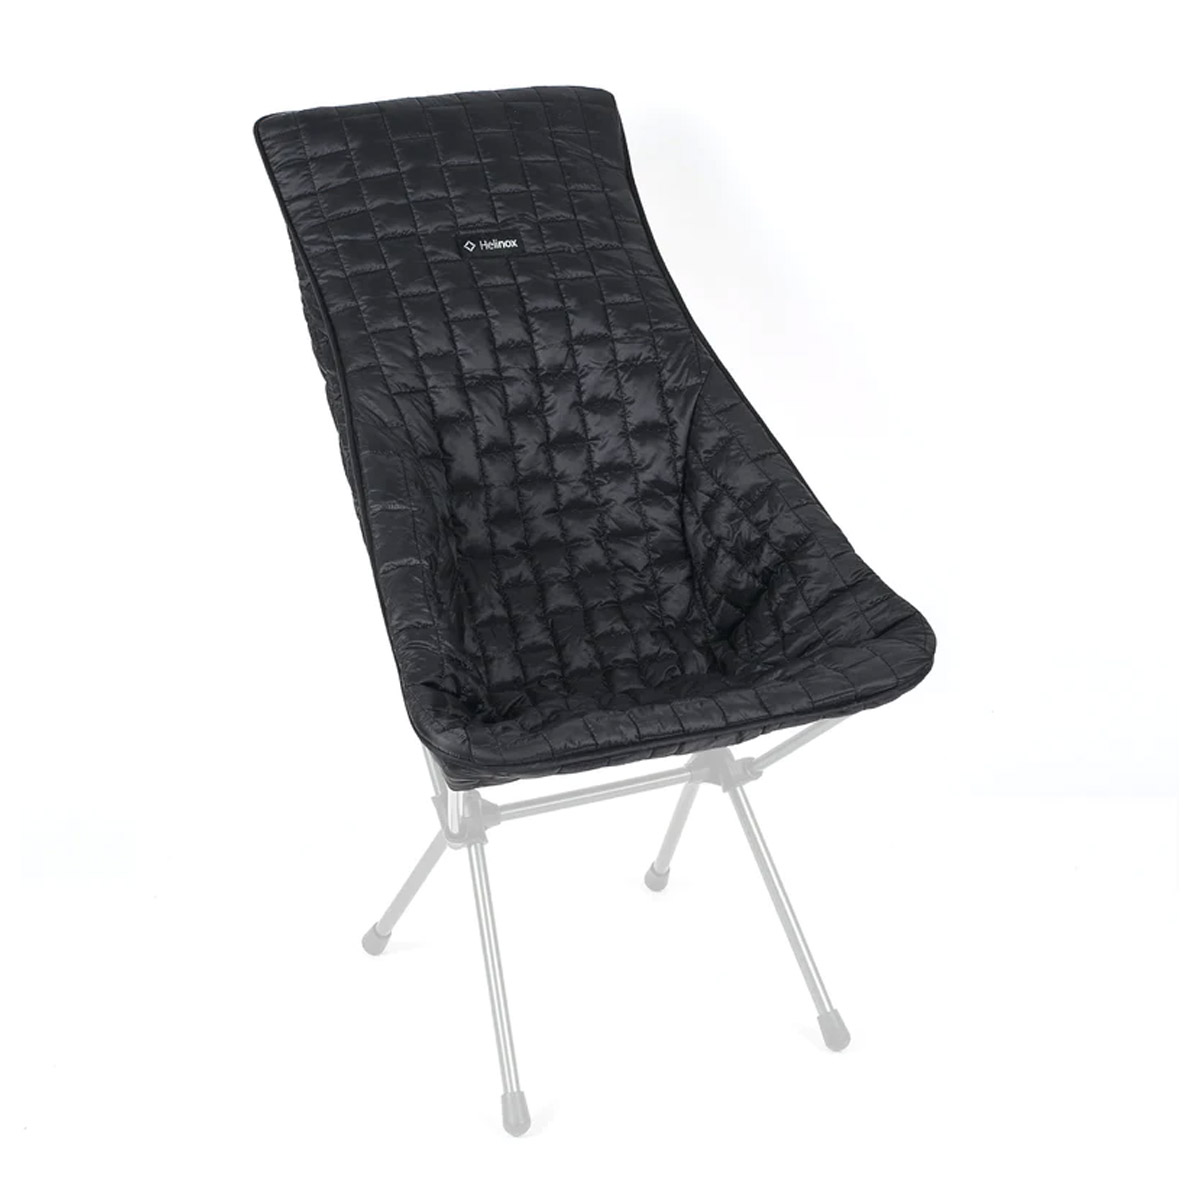 Chauffe-chaise Helinox pour chaises Sunset et Beach